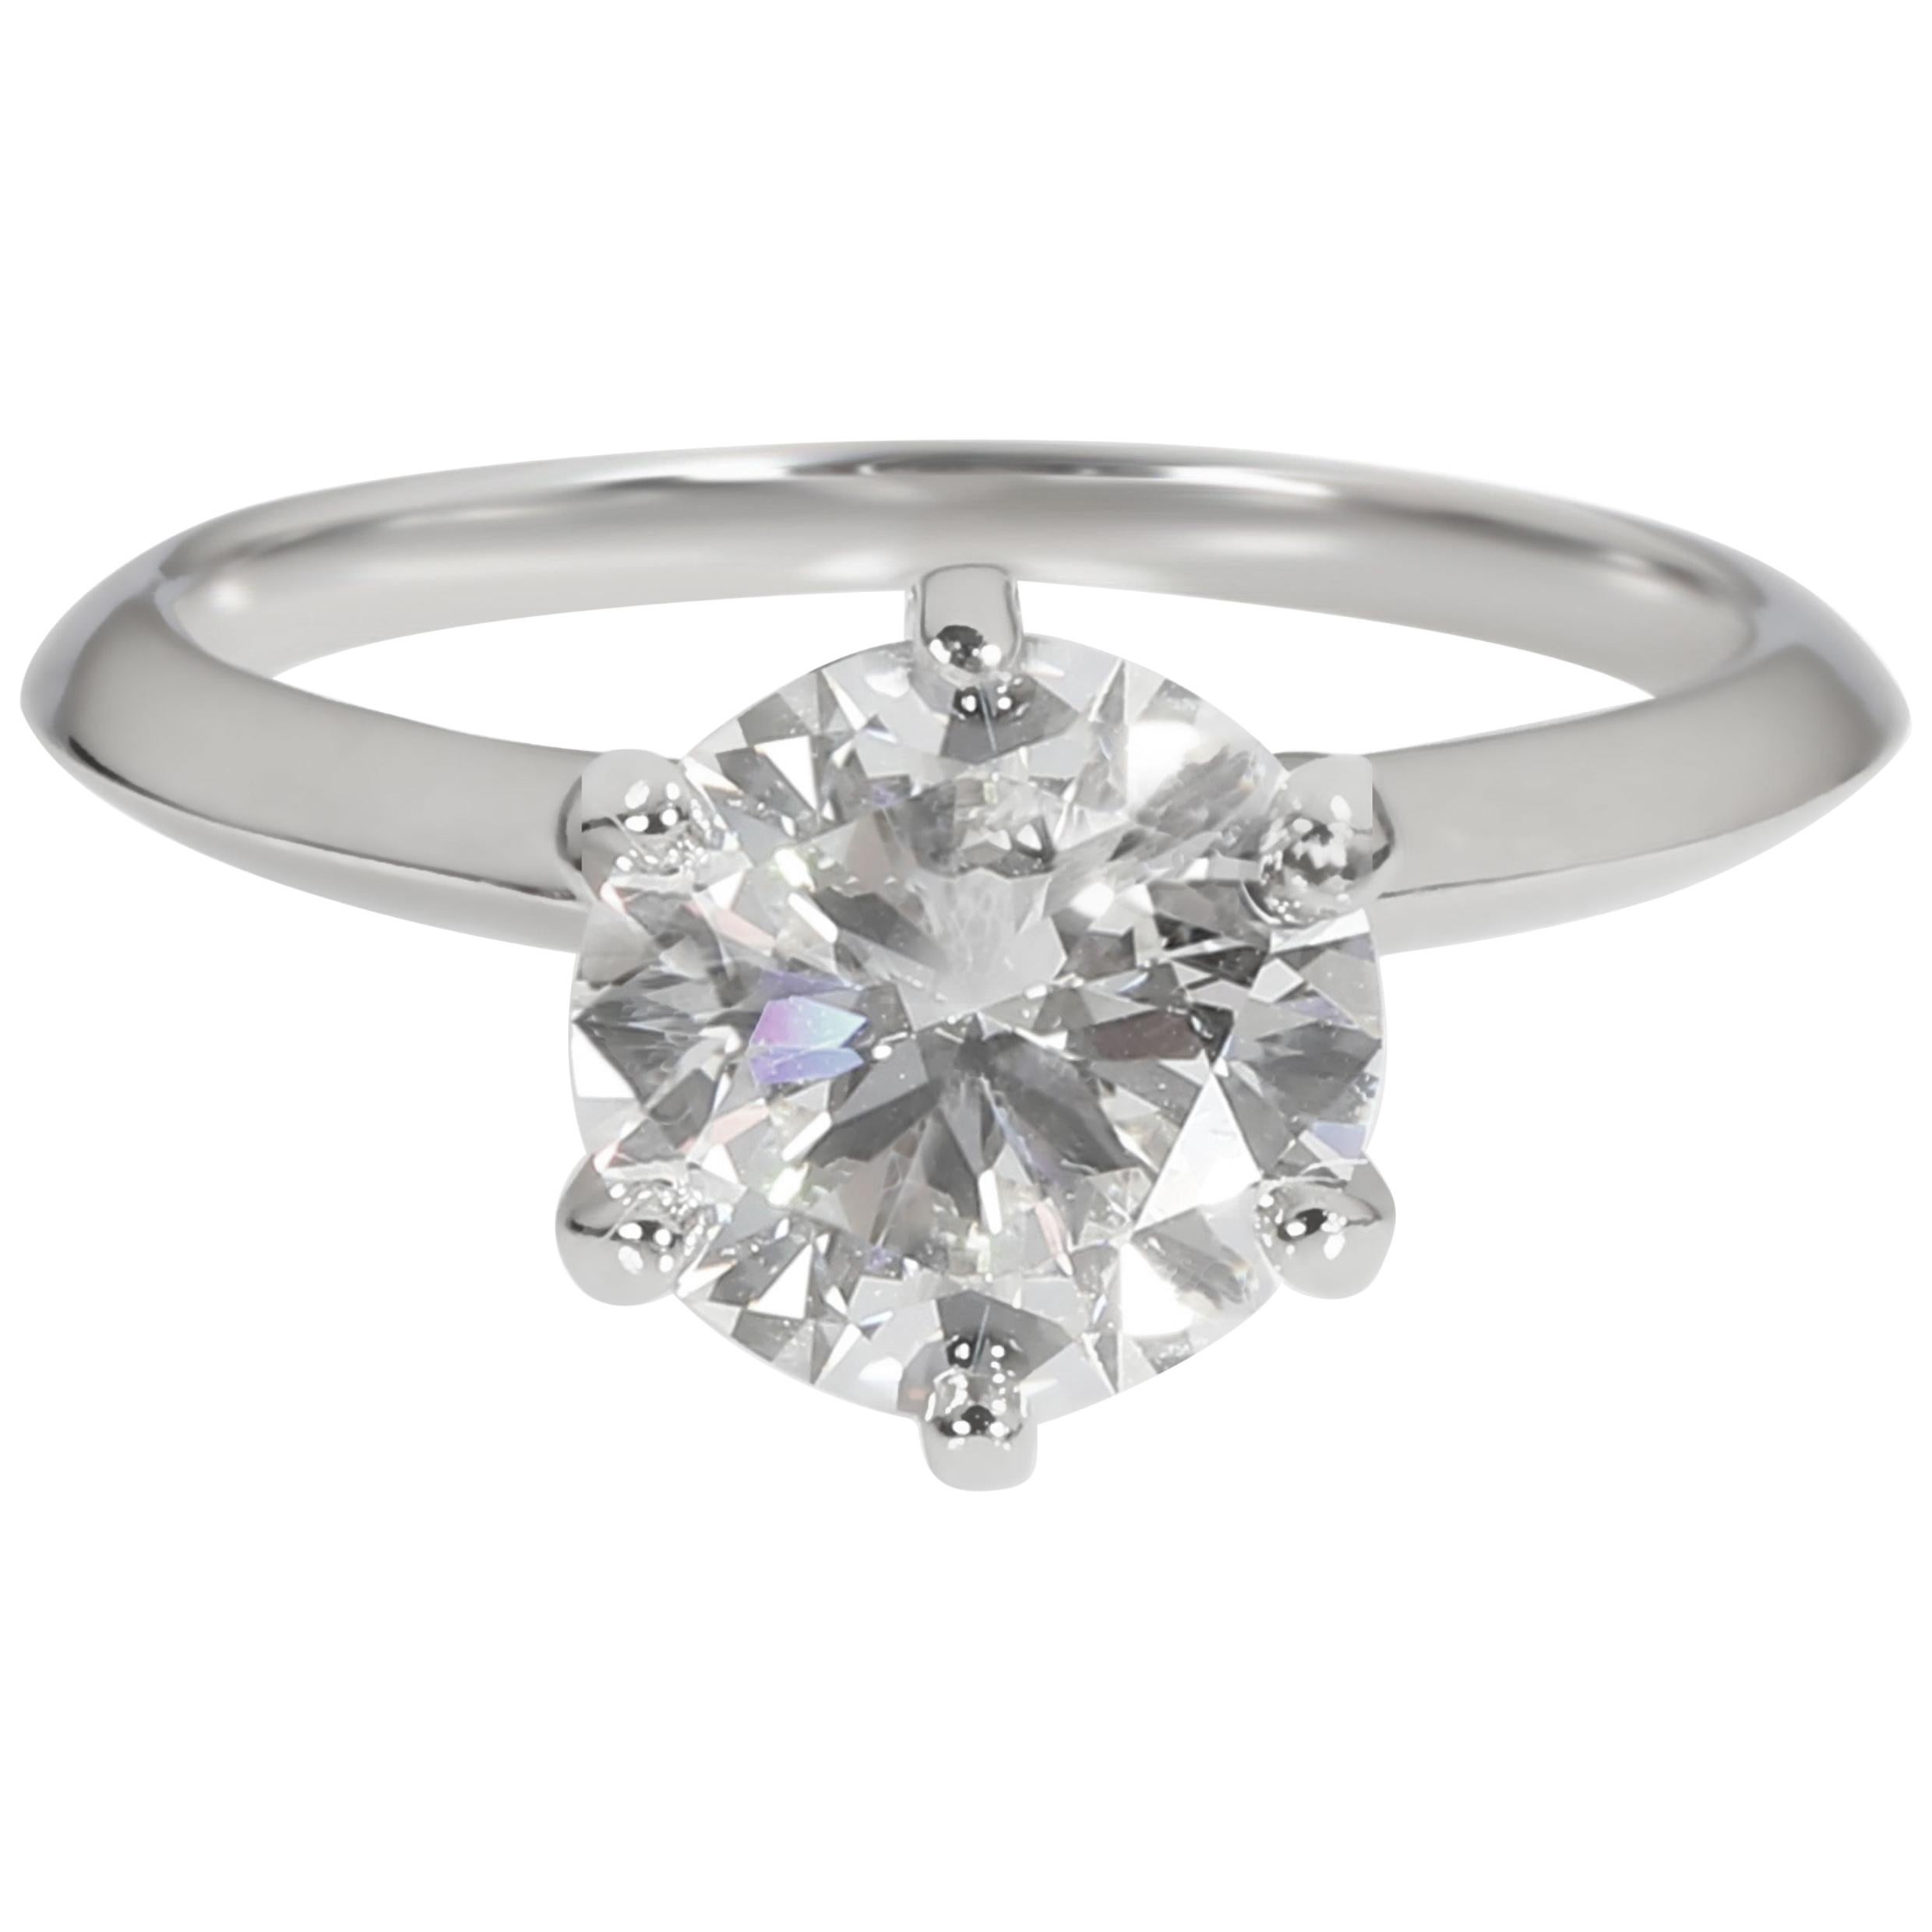 Tiffany & Co. Diamond Solitaire Ring in Platinum I SI1 2.61 Carat